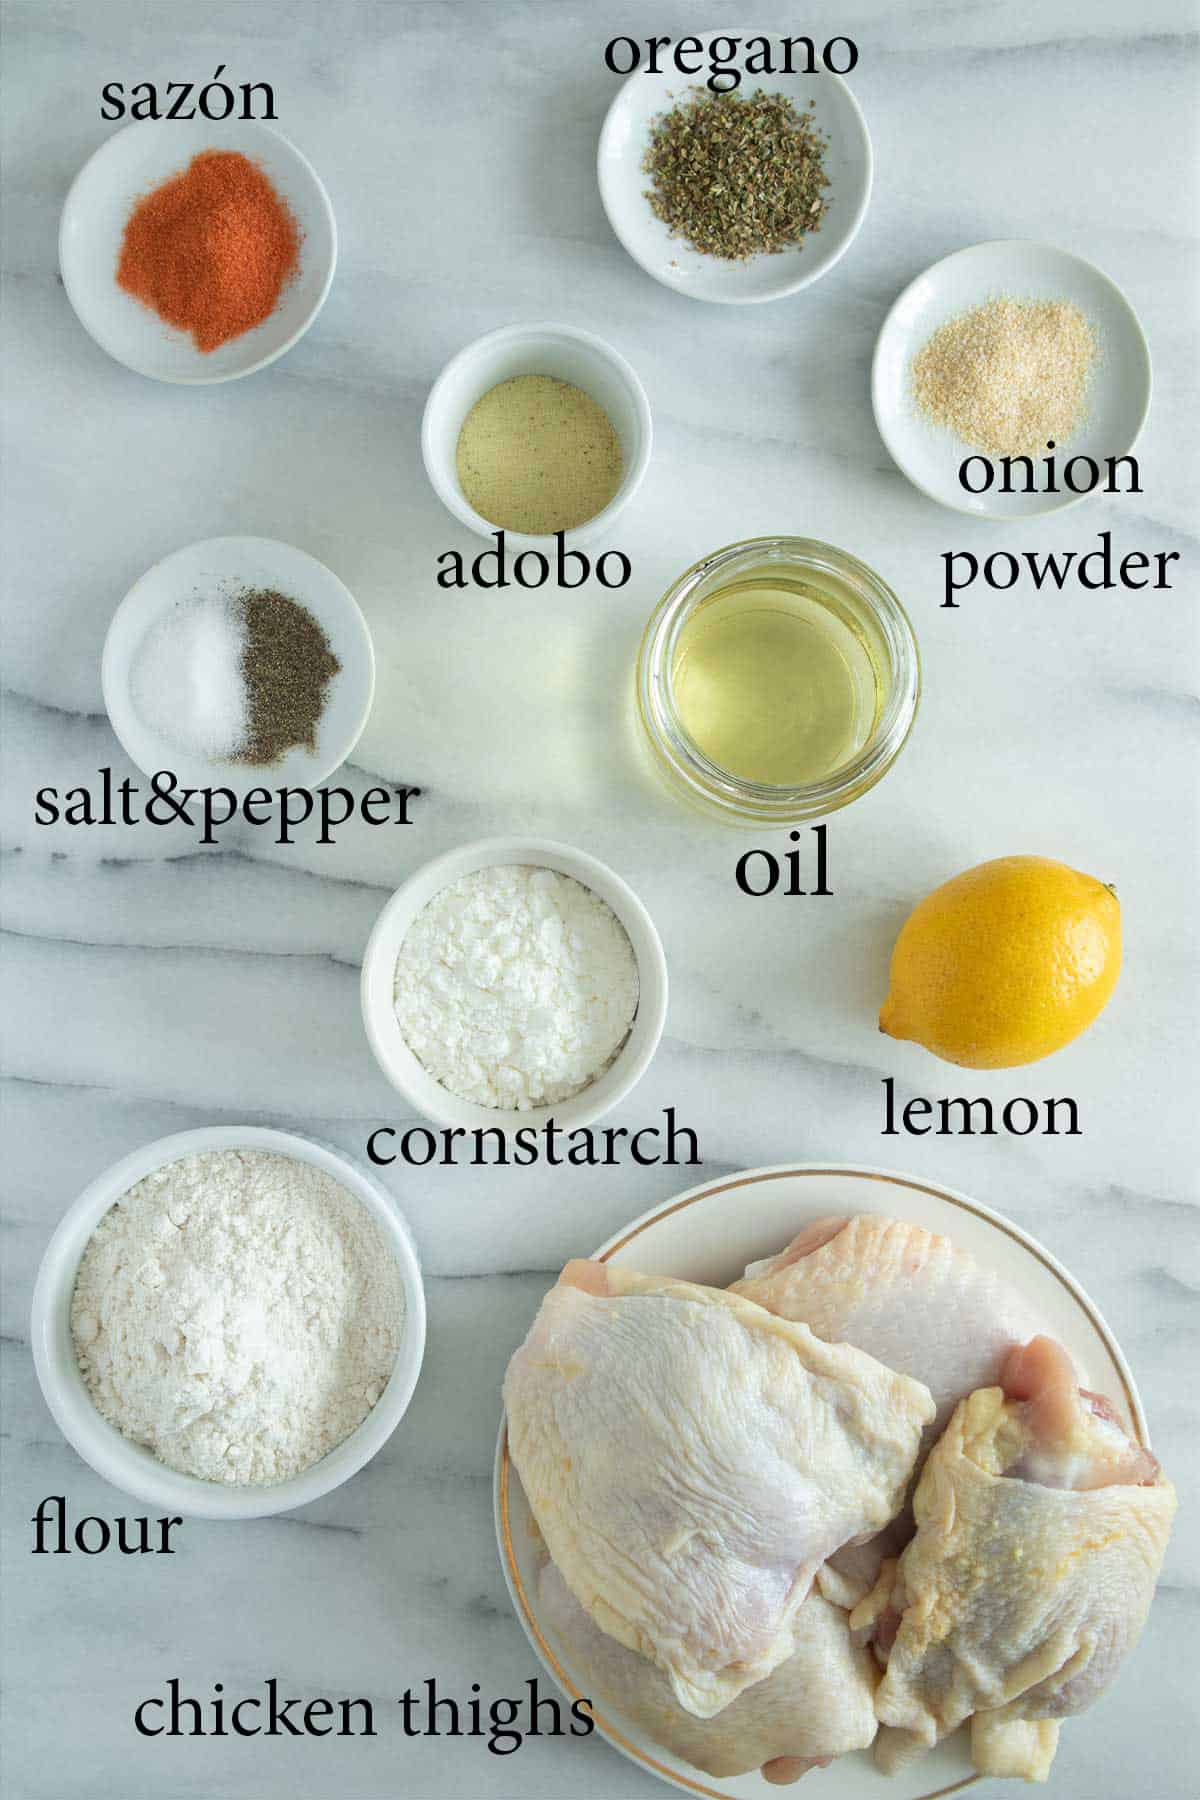 all the ingredients needed to make chicharron de pollo.